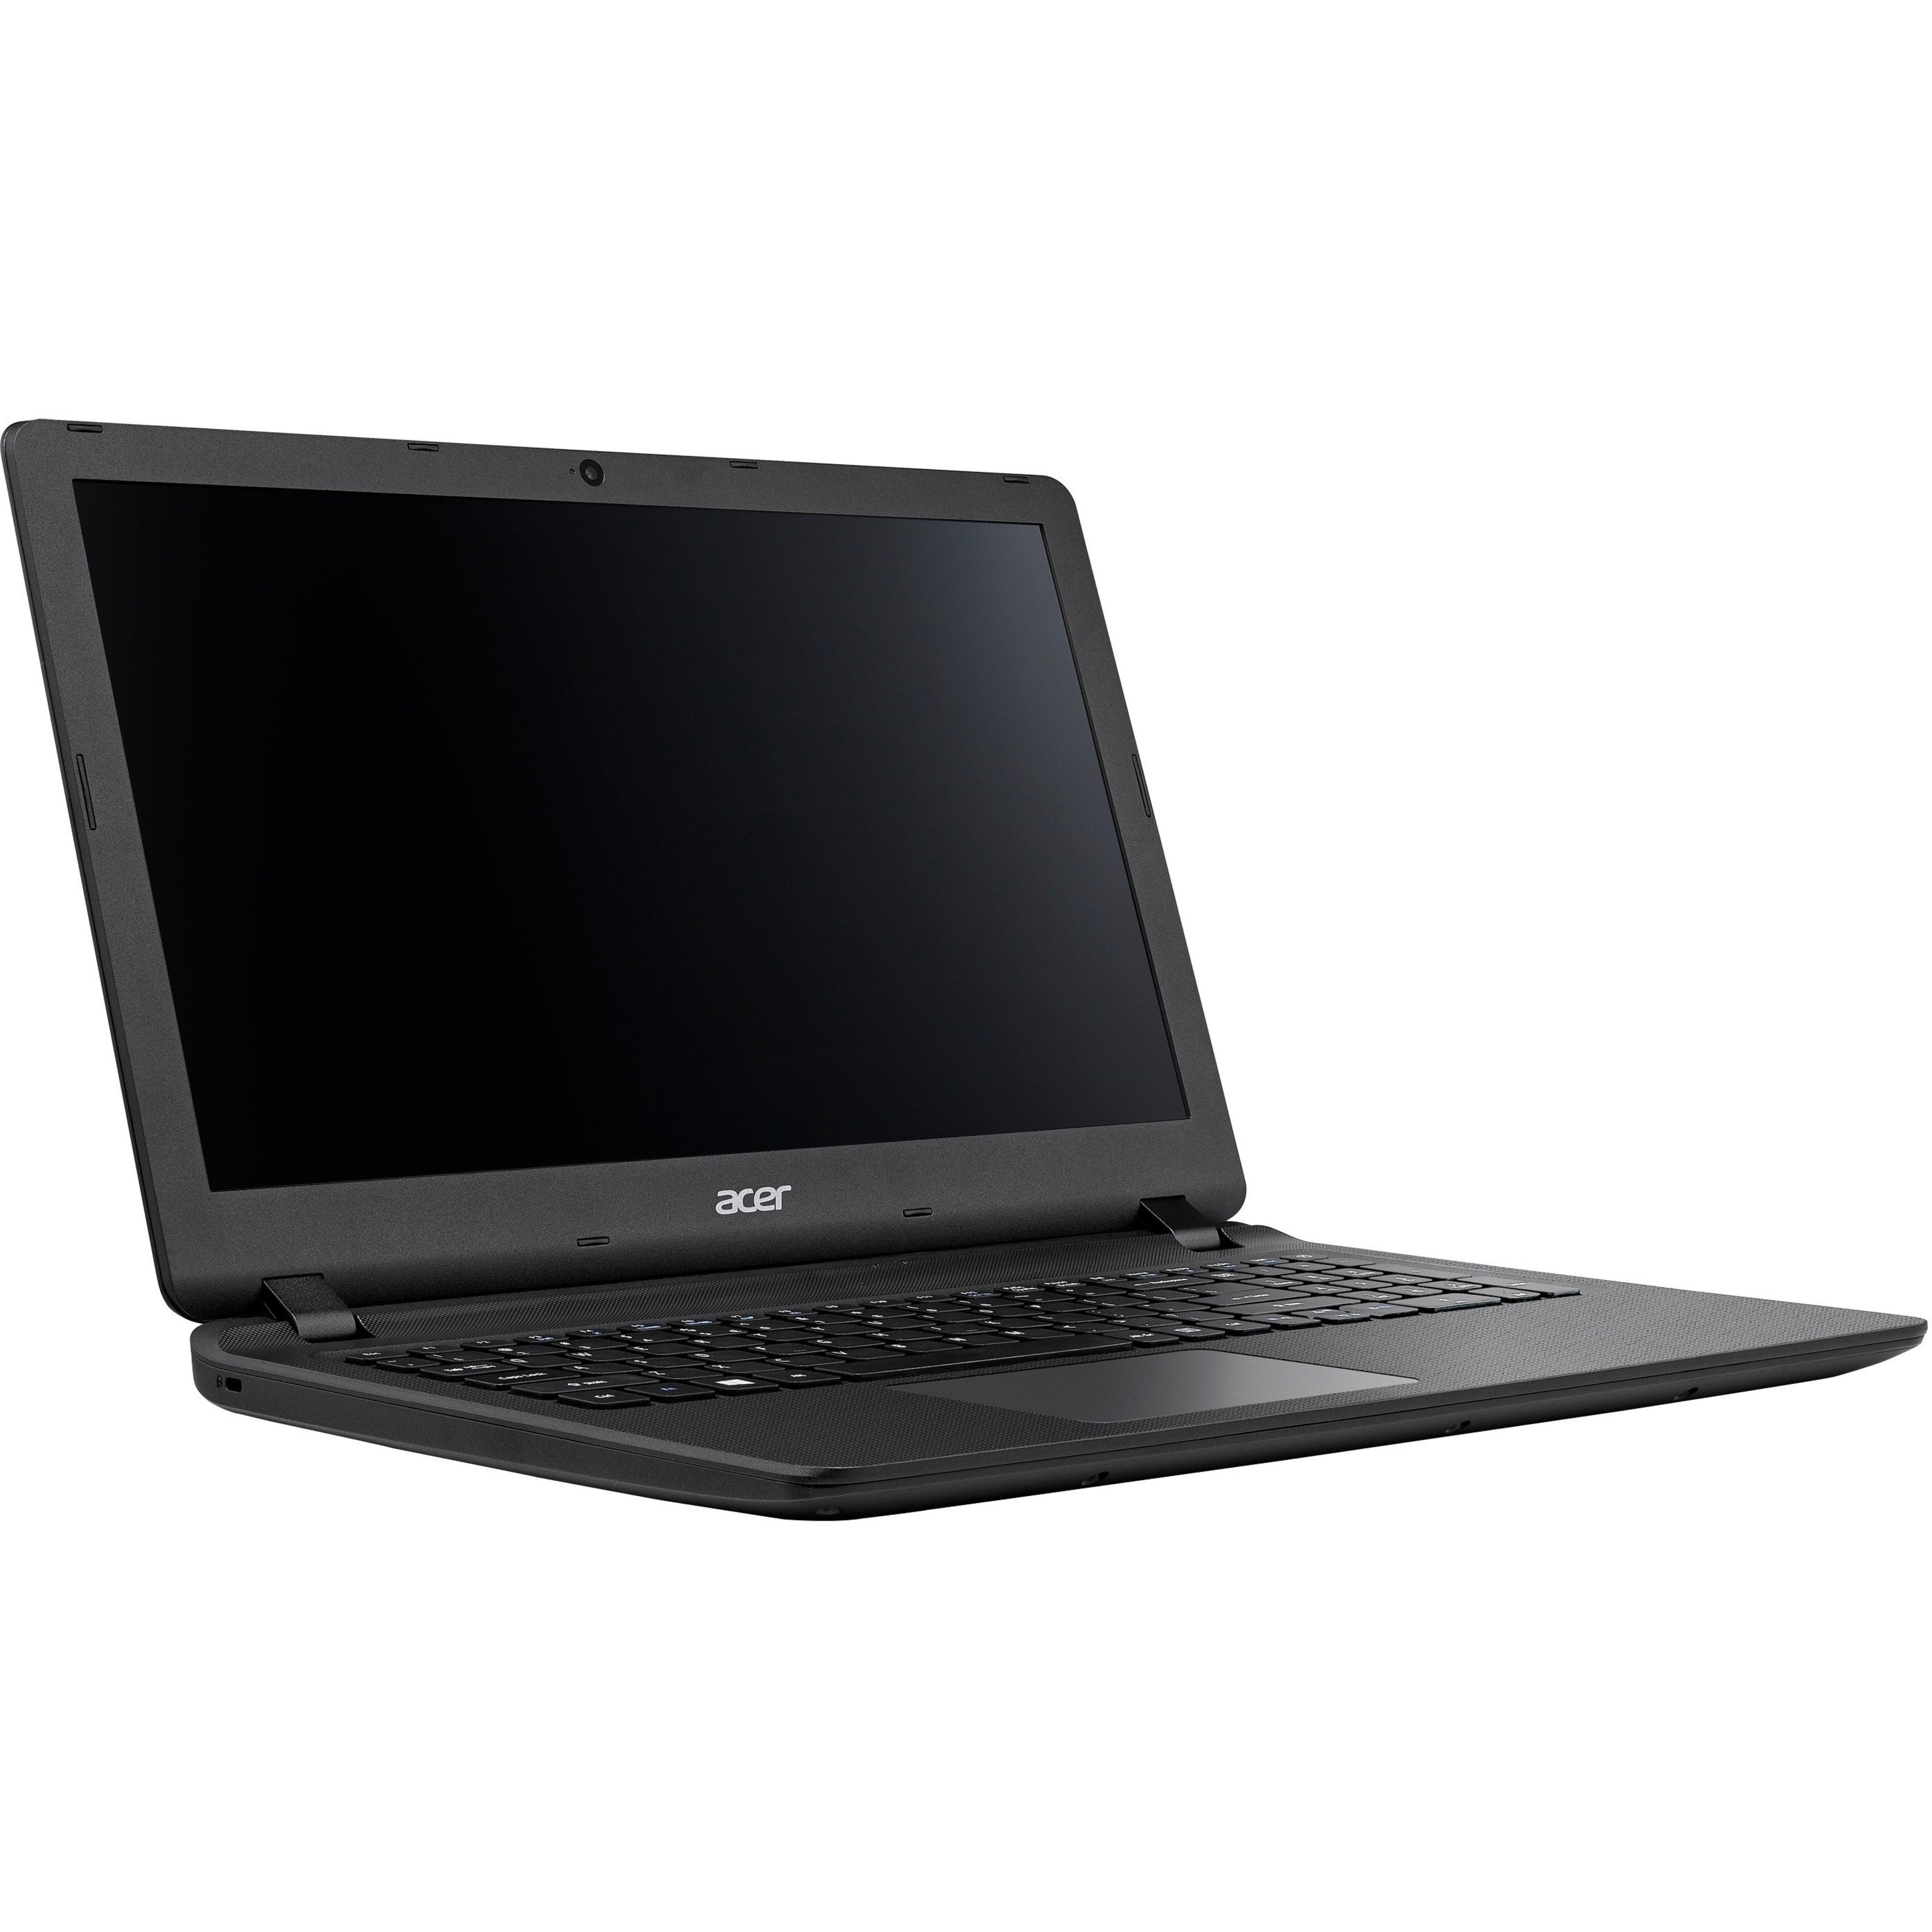 Acer Aspire 15.6" Laptop, Intel Core i3 i3-6100U, 1TB HD, DVD Writer, Windows 10 Home, ES1-572-31XL - image 3 of 5